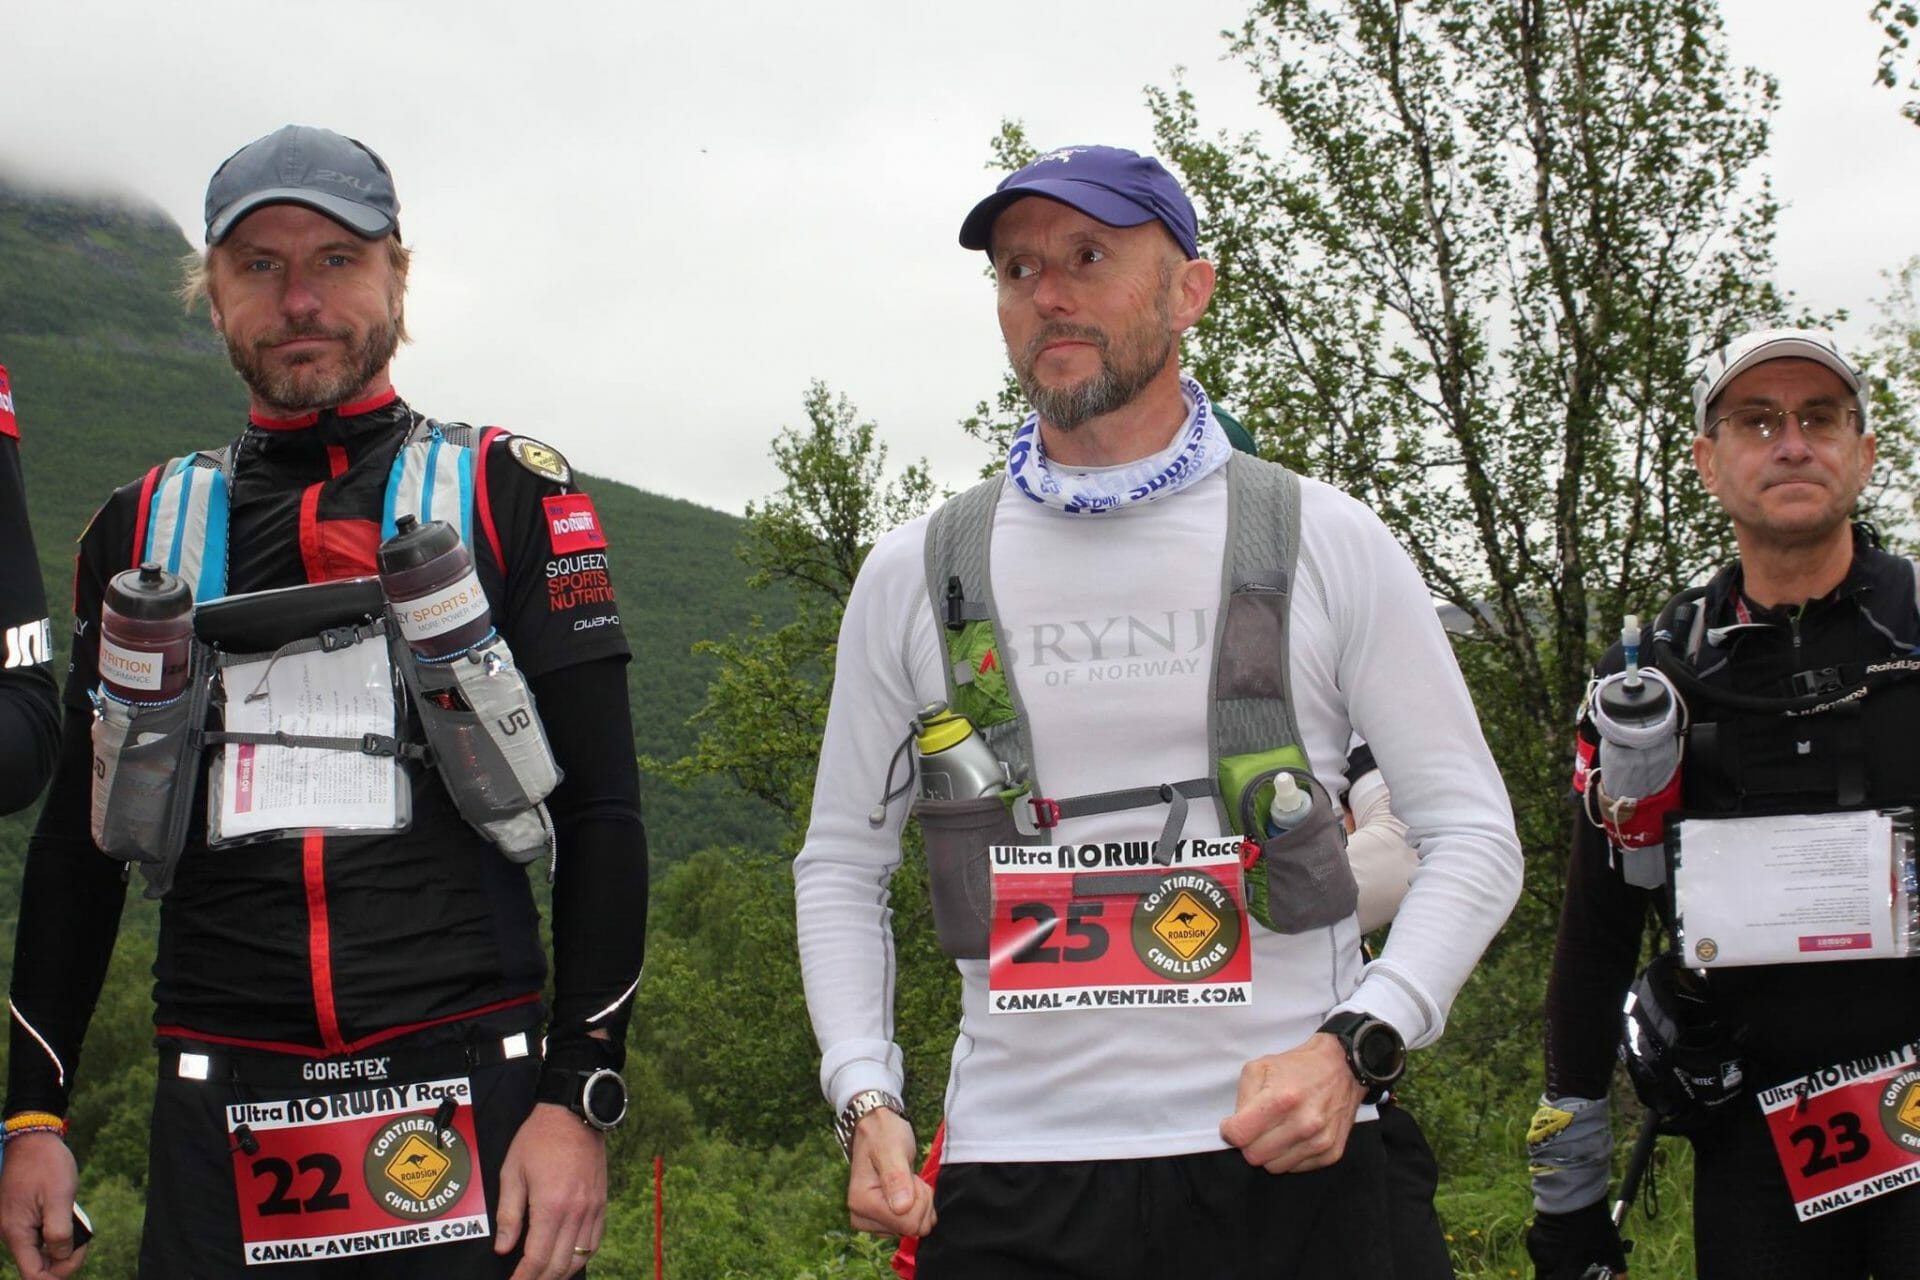 Canal-Aventure :: start, Ultra Norway Race?